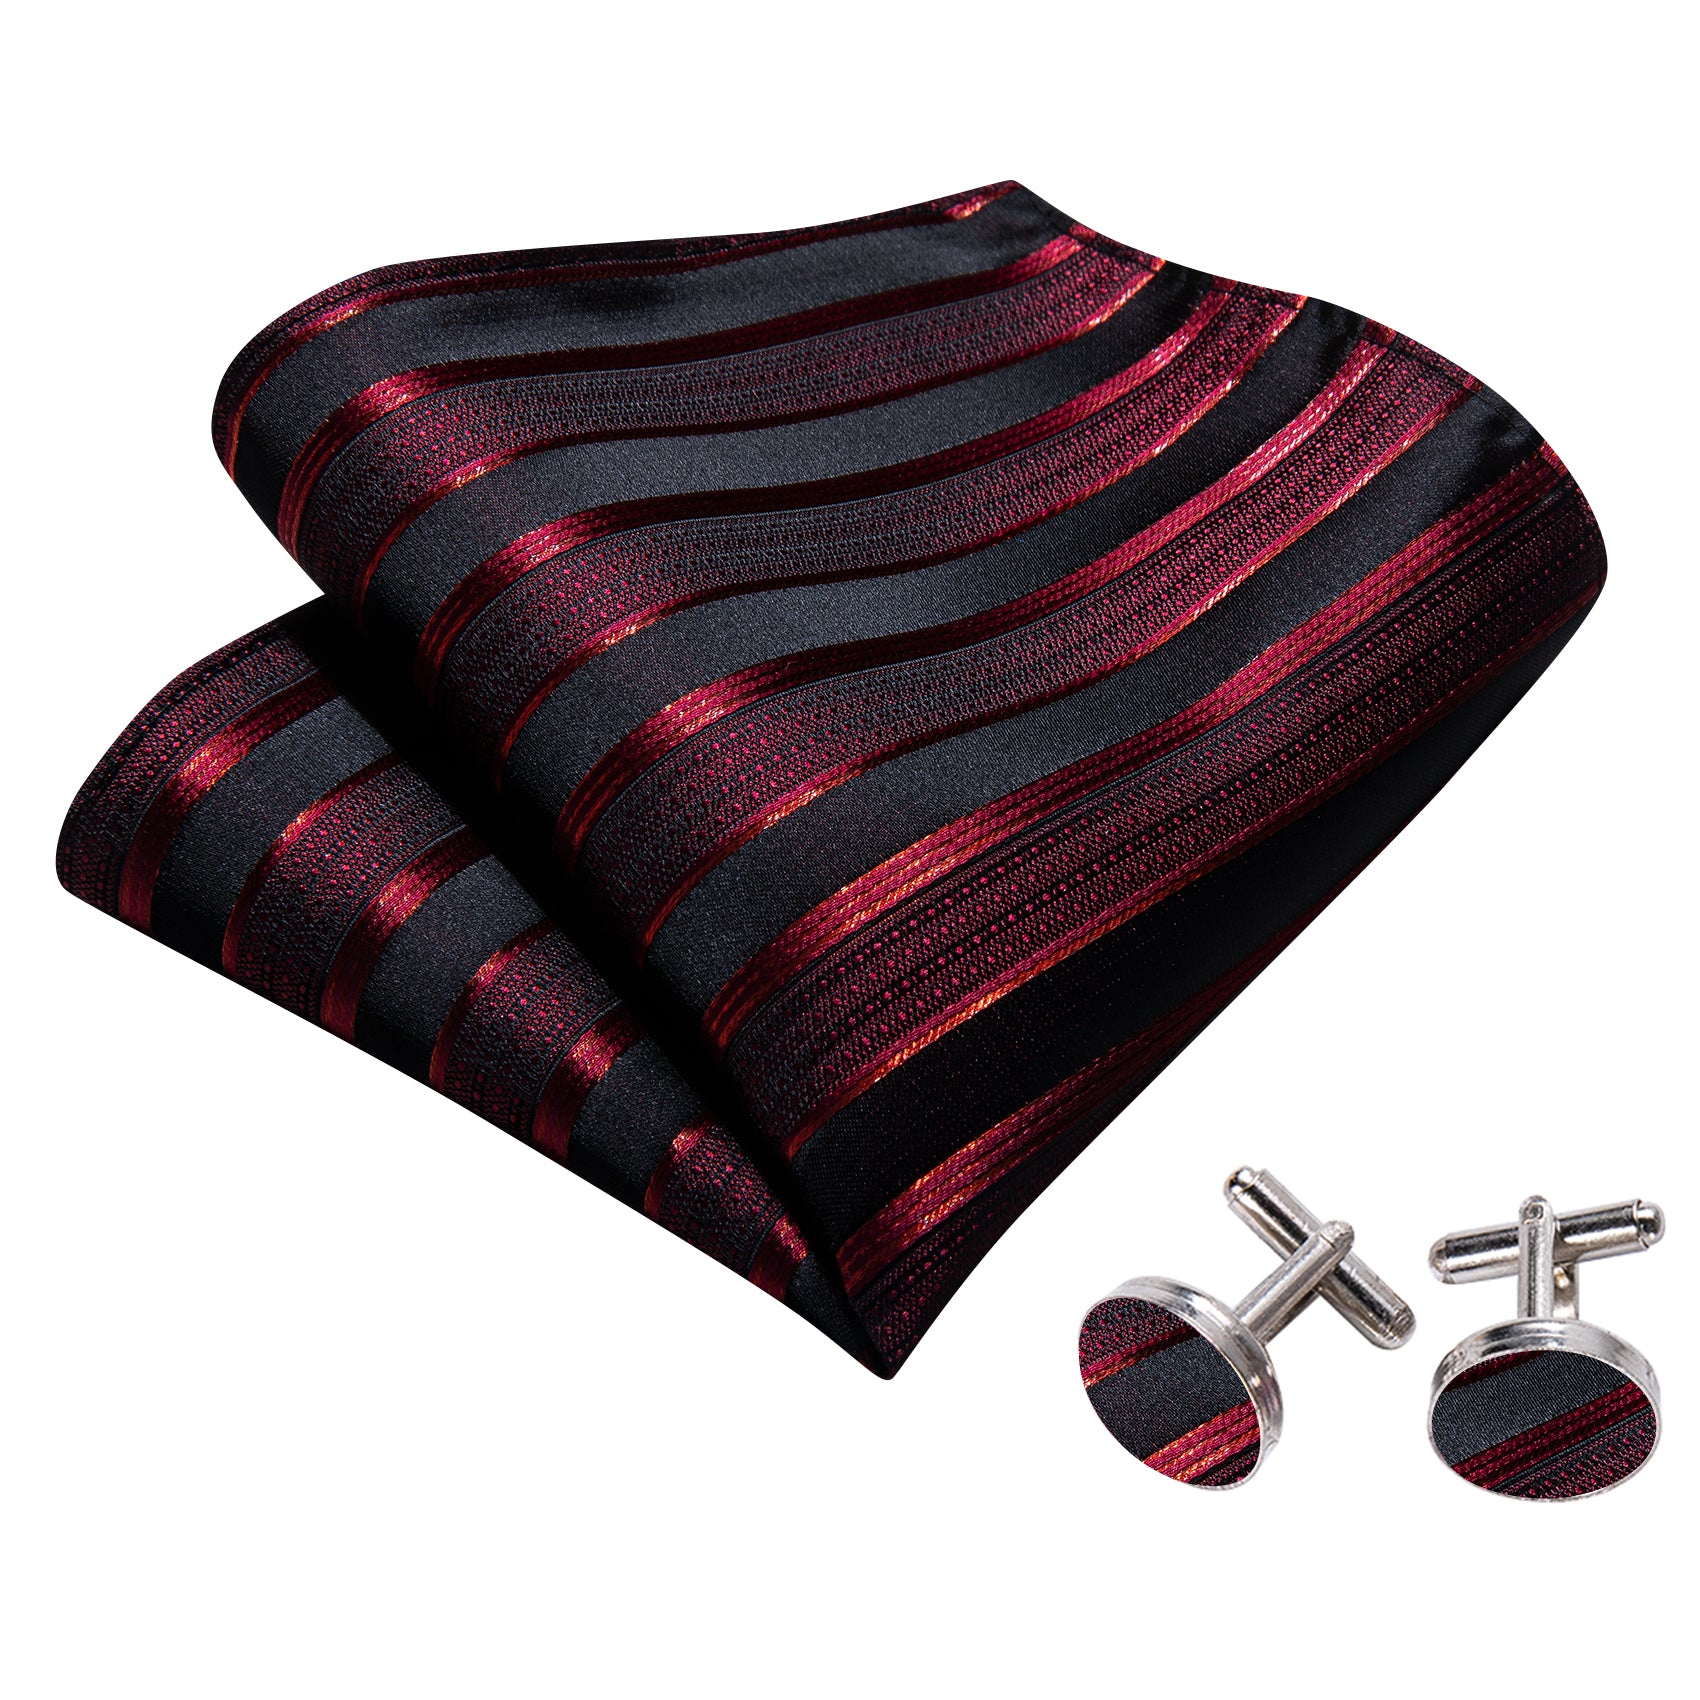 Claret Red Black Striped Silk Self Bow Tie Hanky Cufflinks Set